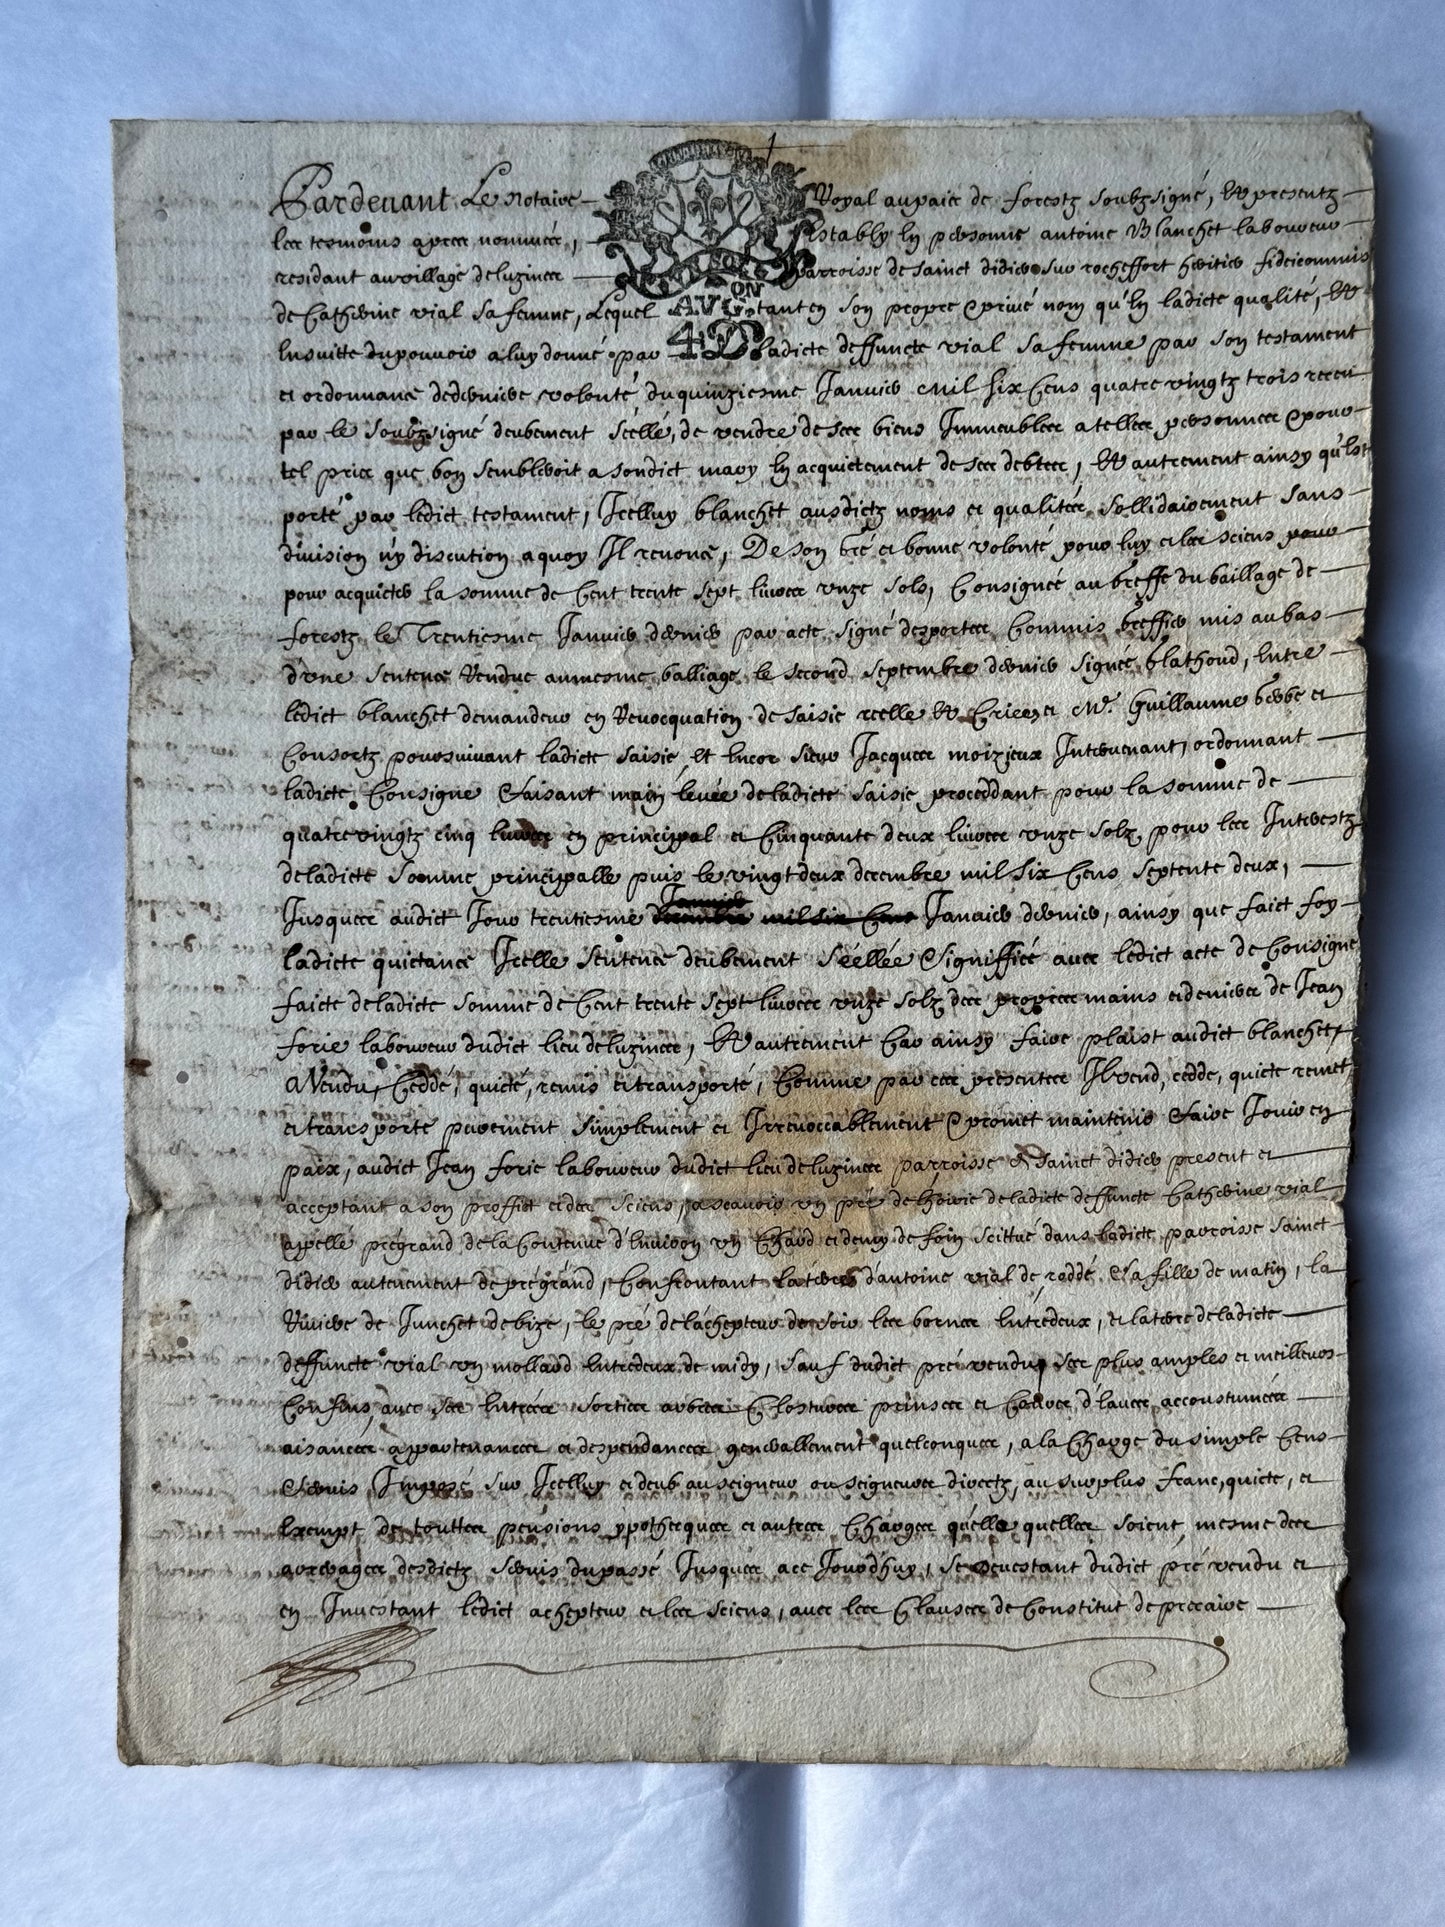 1685 French Manuscript